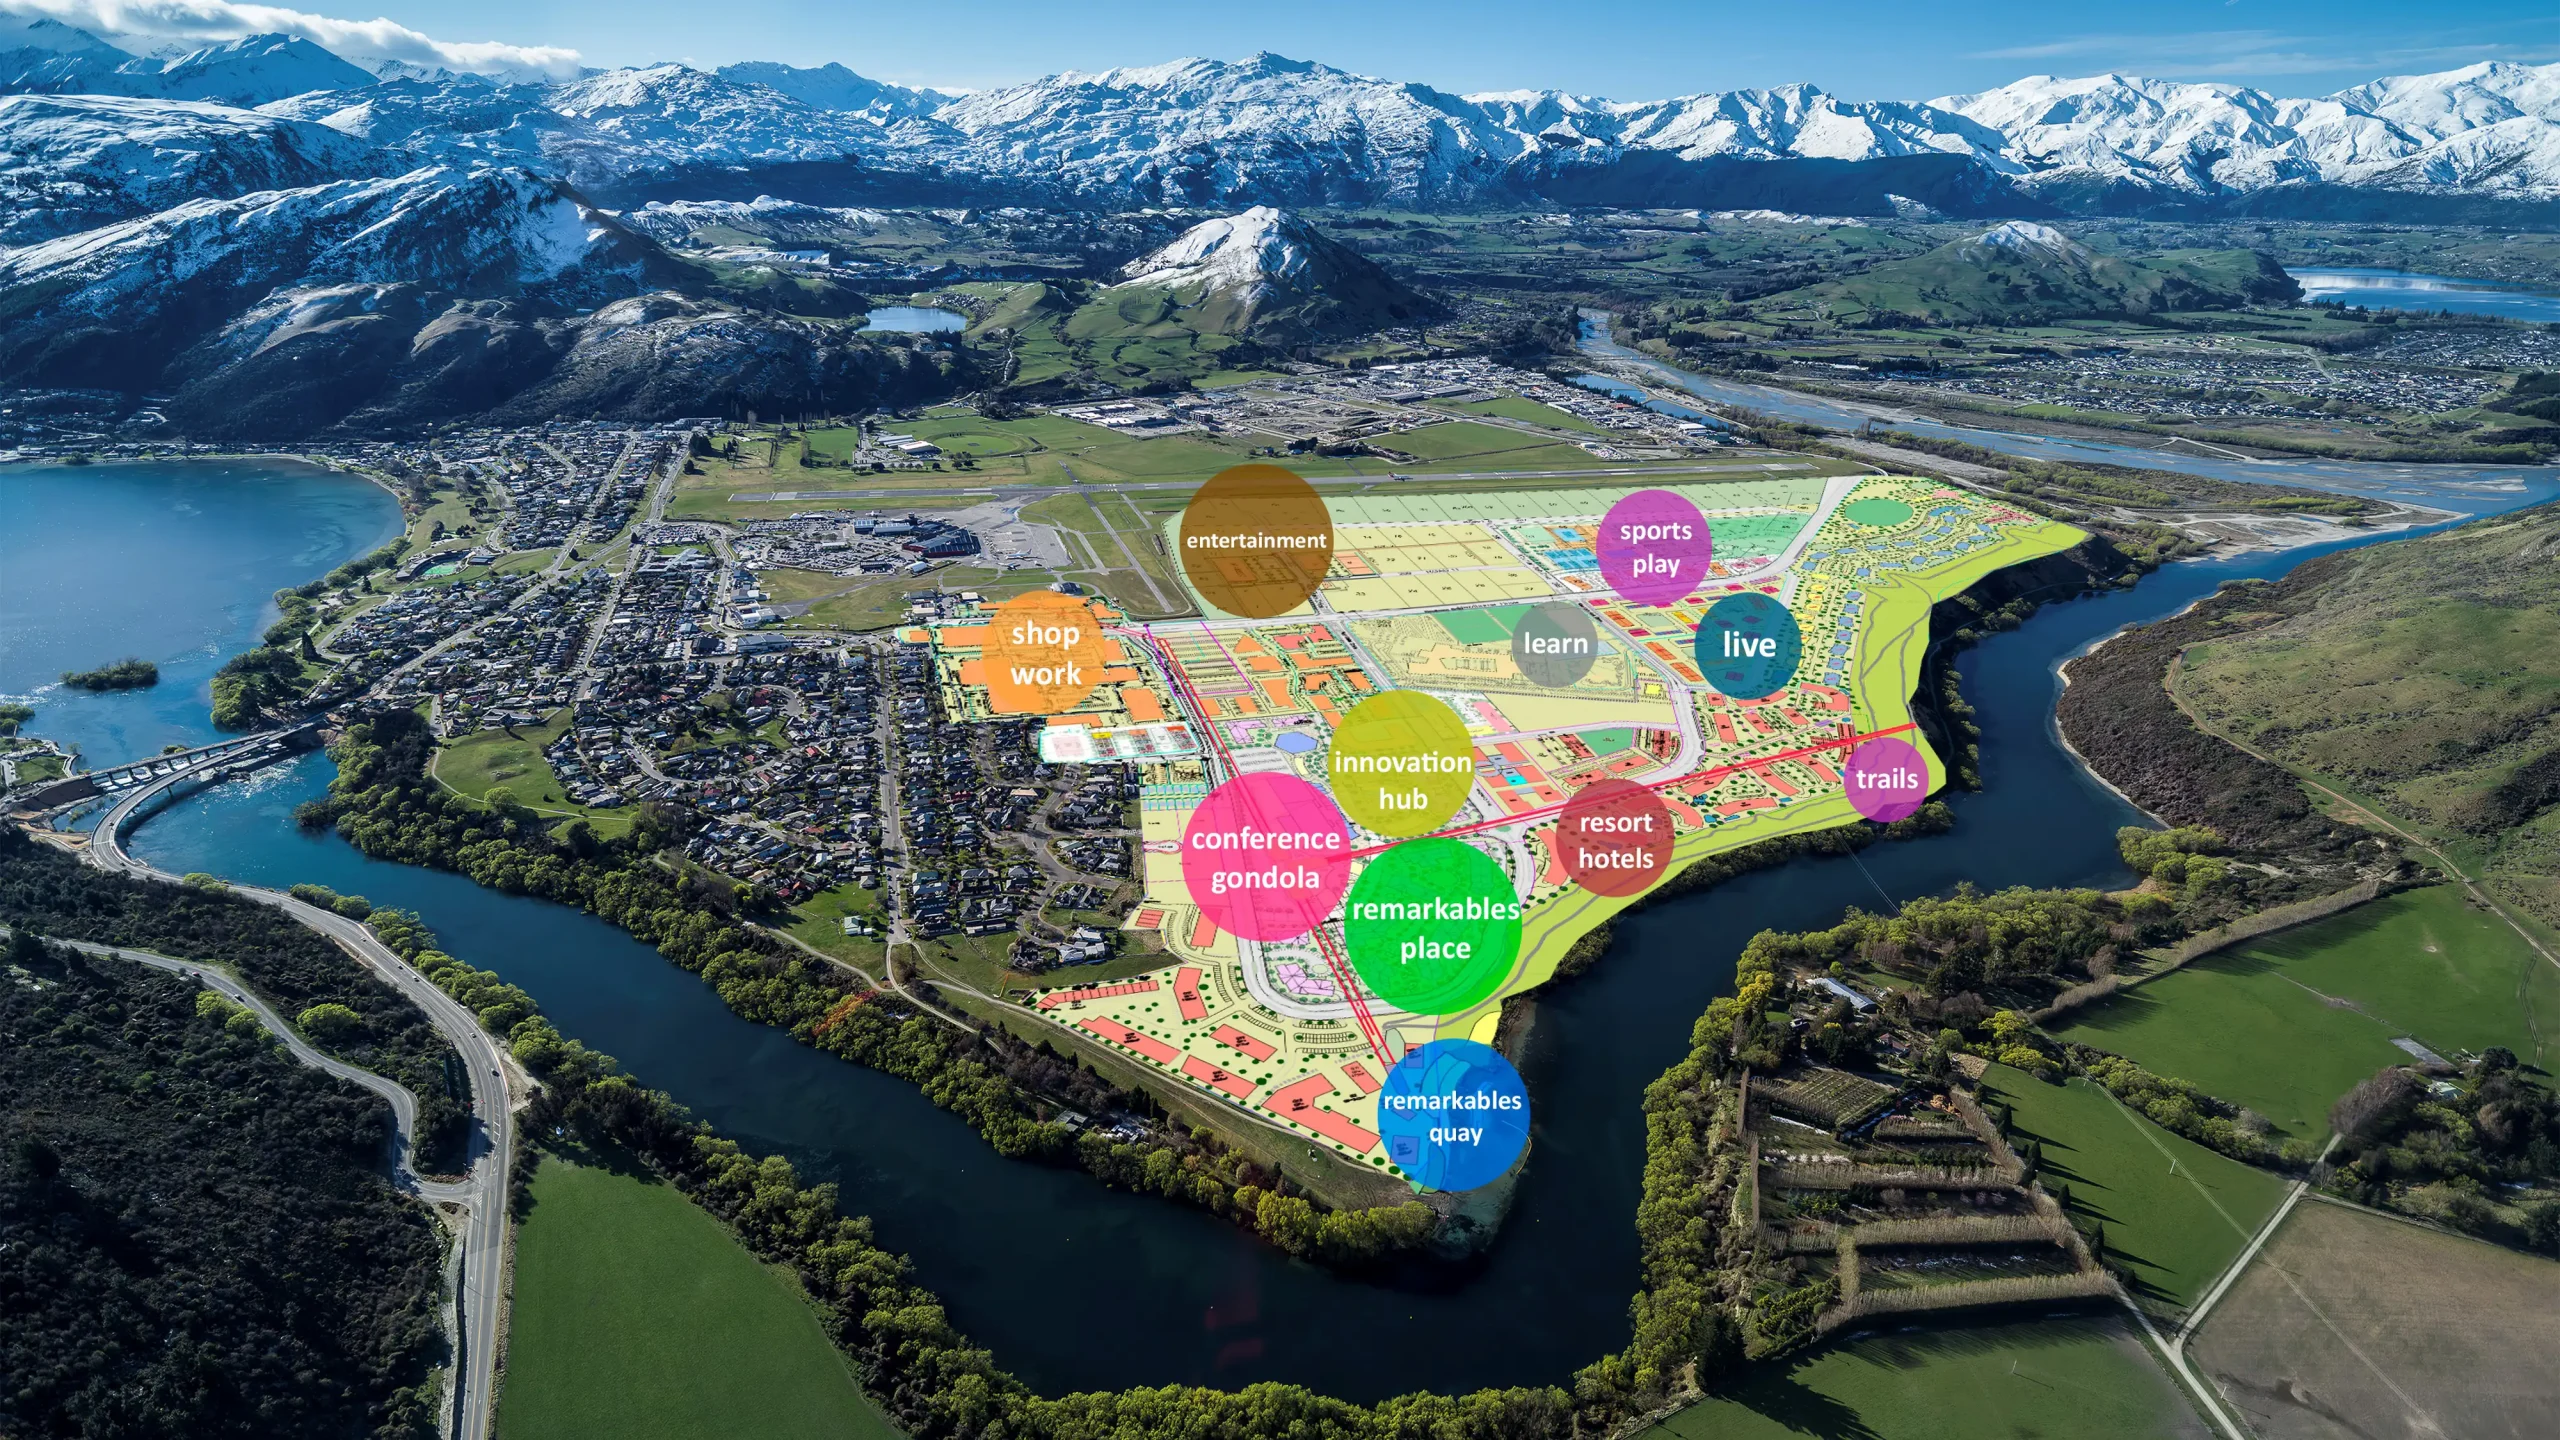 Remarkables Park, Property developers, land for sale, Queenstown, New Zealand